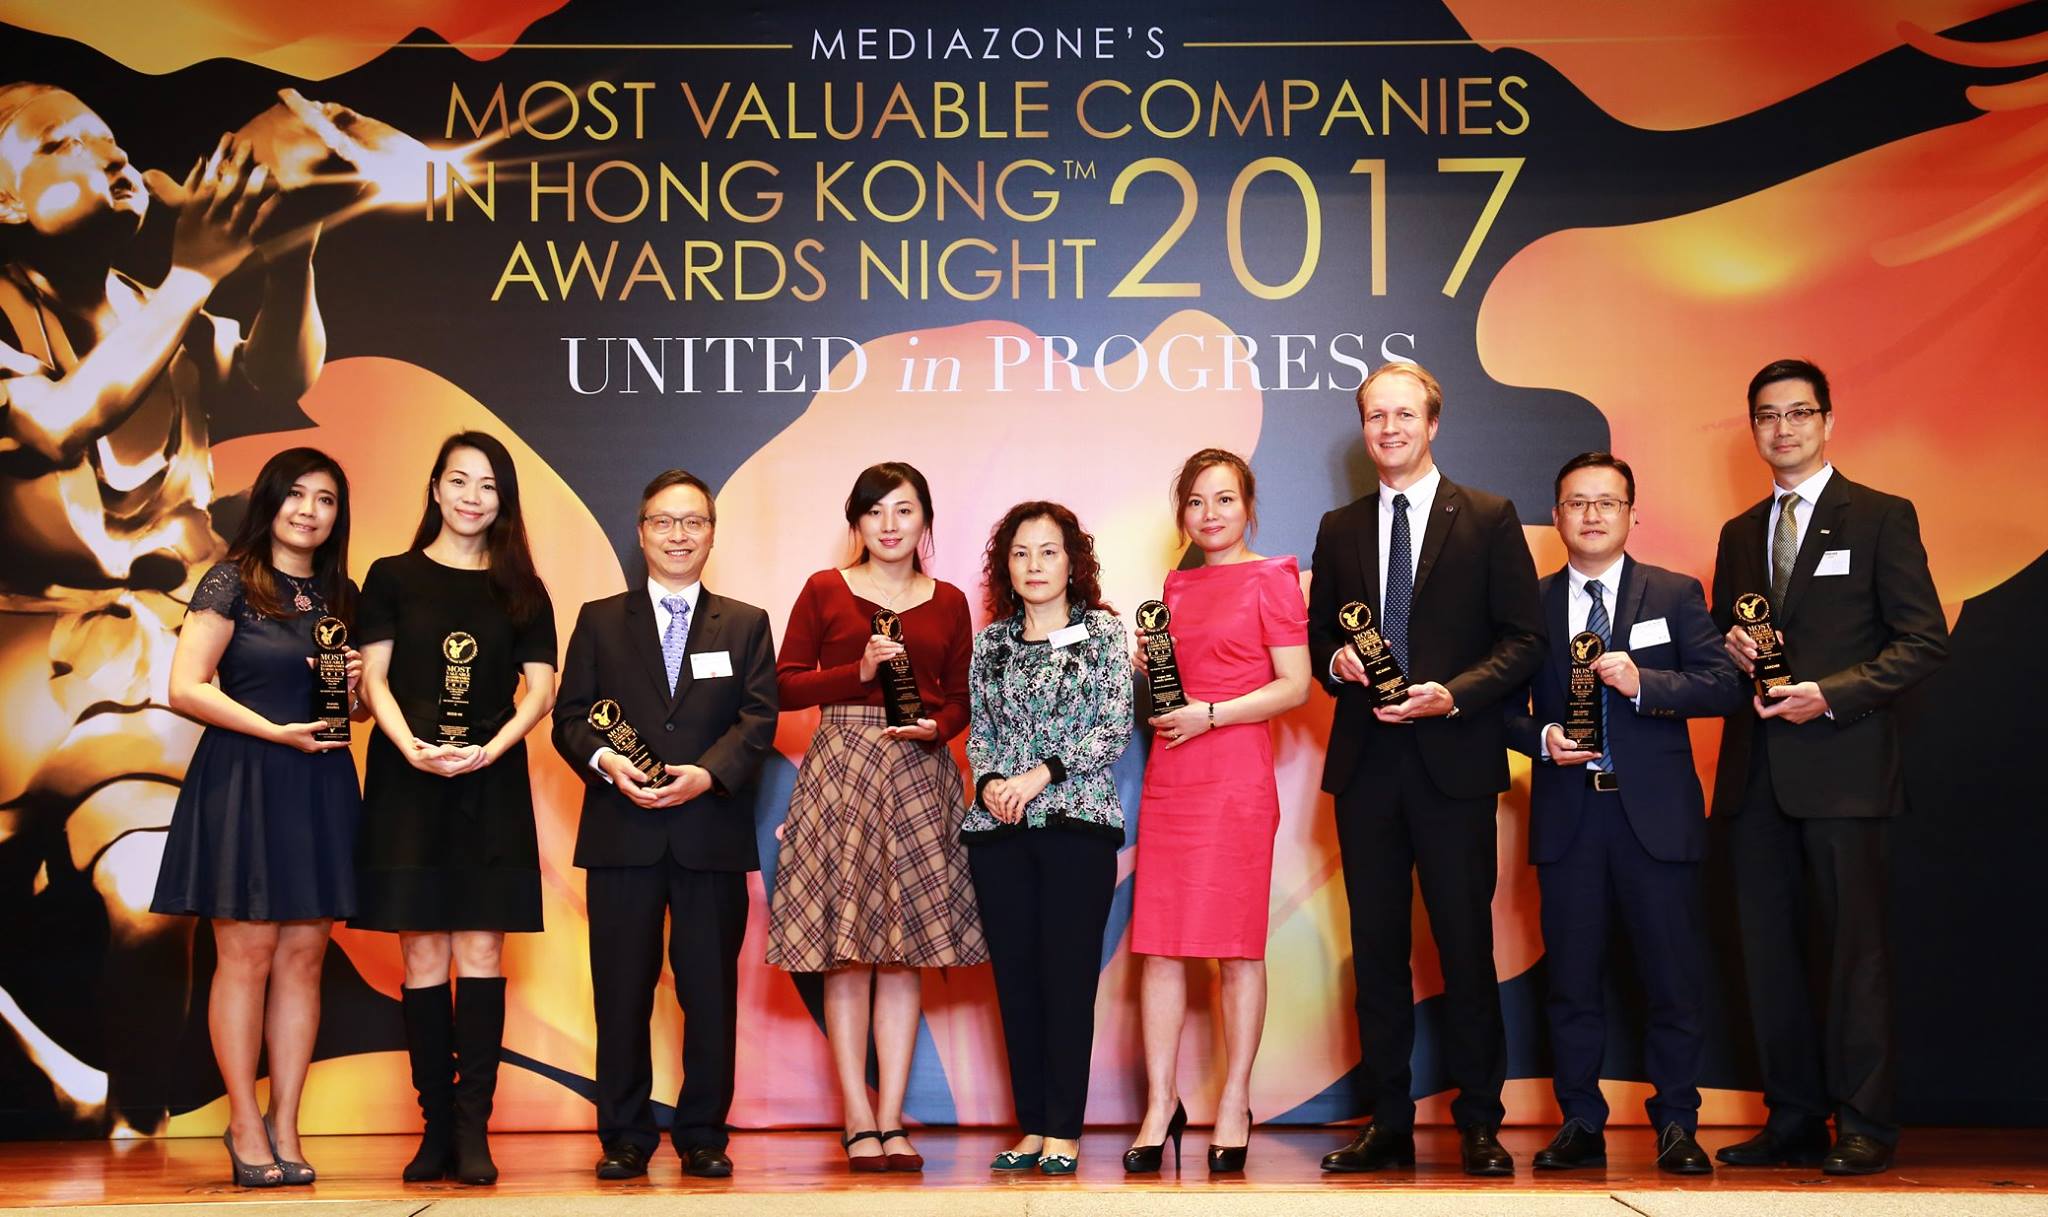 Winner of the “Oscar of Business” in Hong Kong